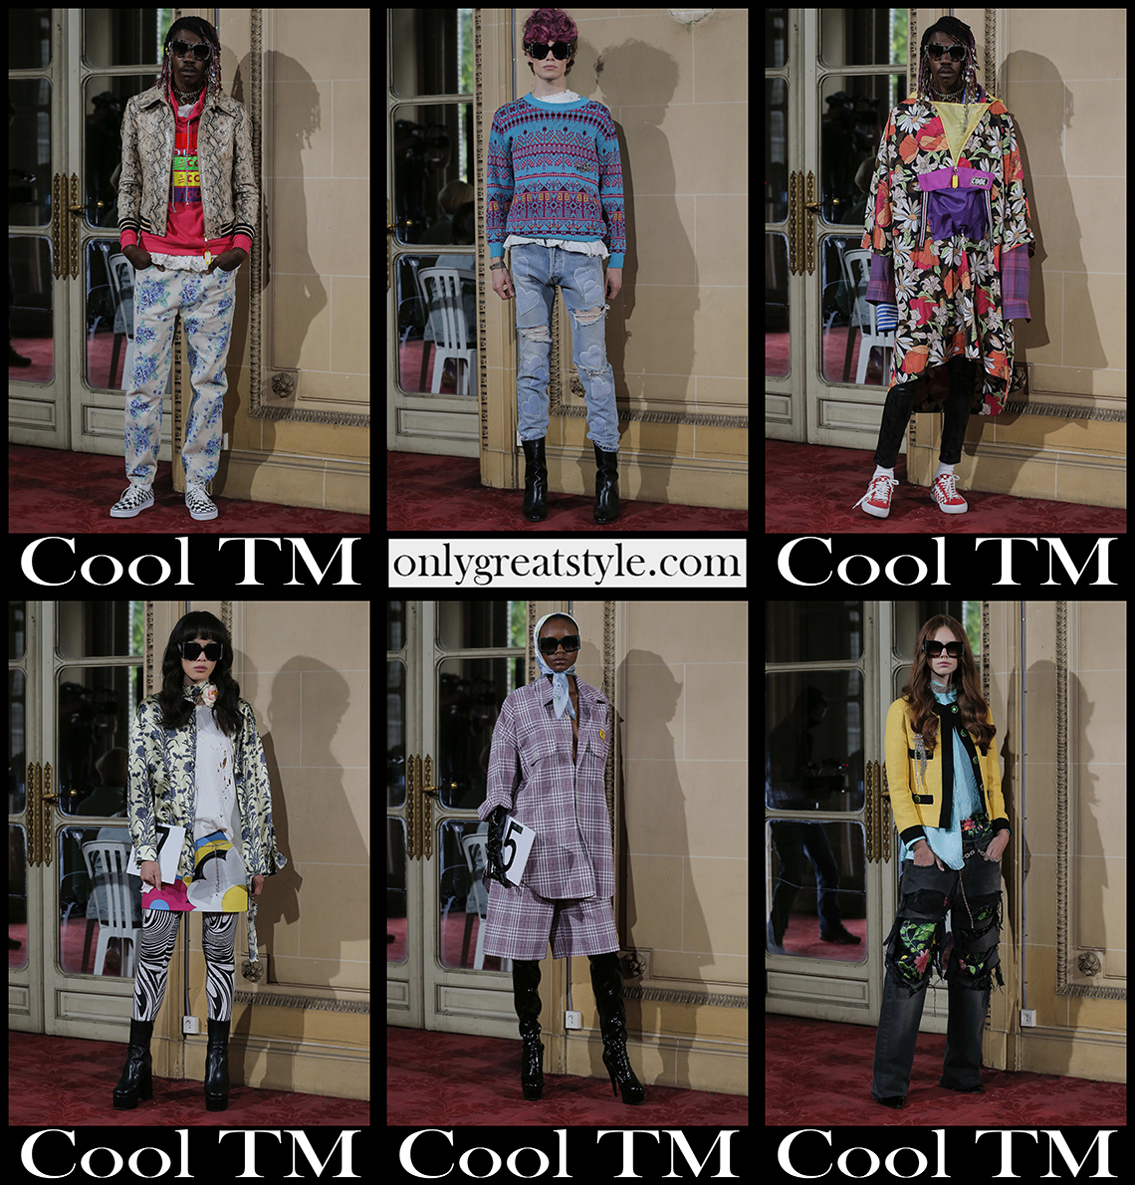 Fashion show Cool TM spring summer 2022 clothing